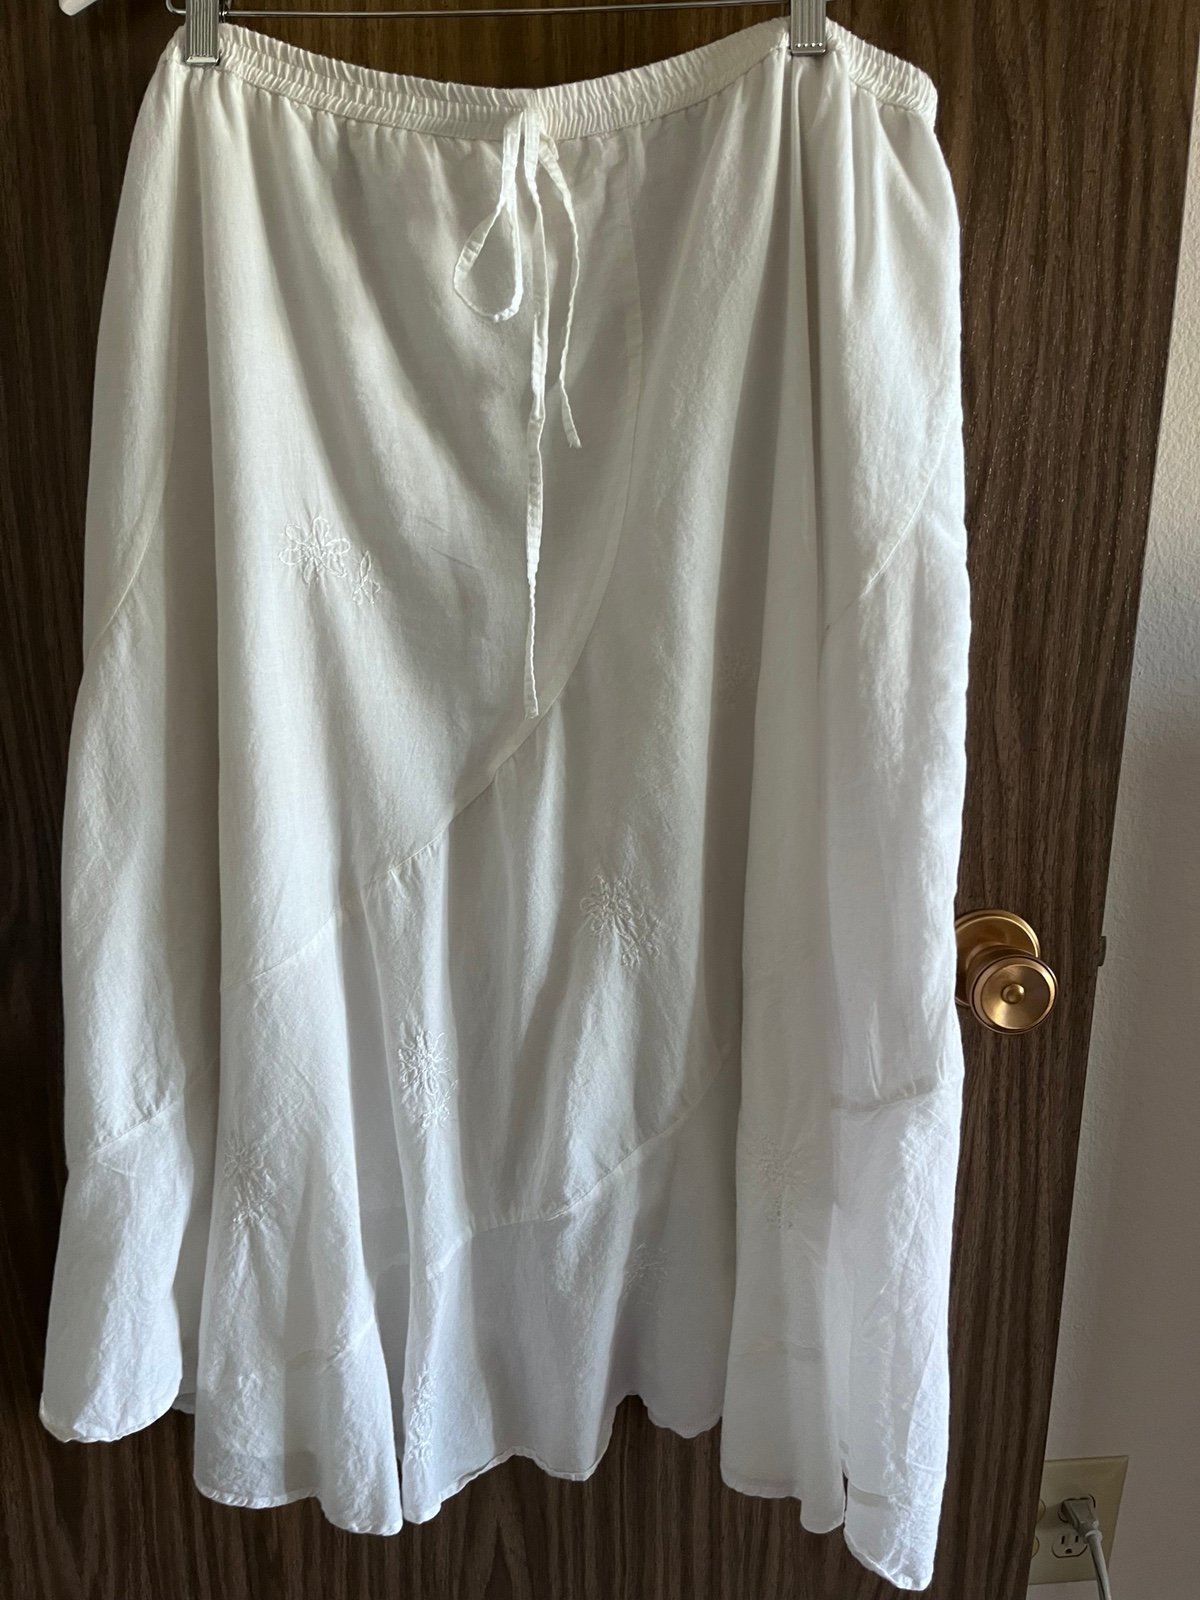 Cheap Metrowear 3X white Cotton Skirt Preowned KIQ9xY68